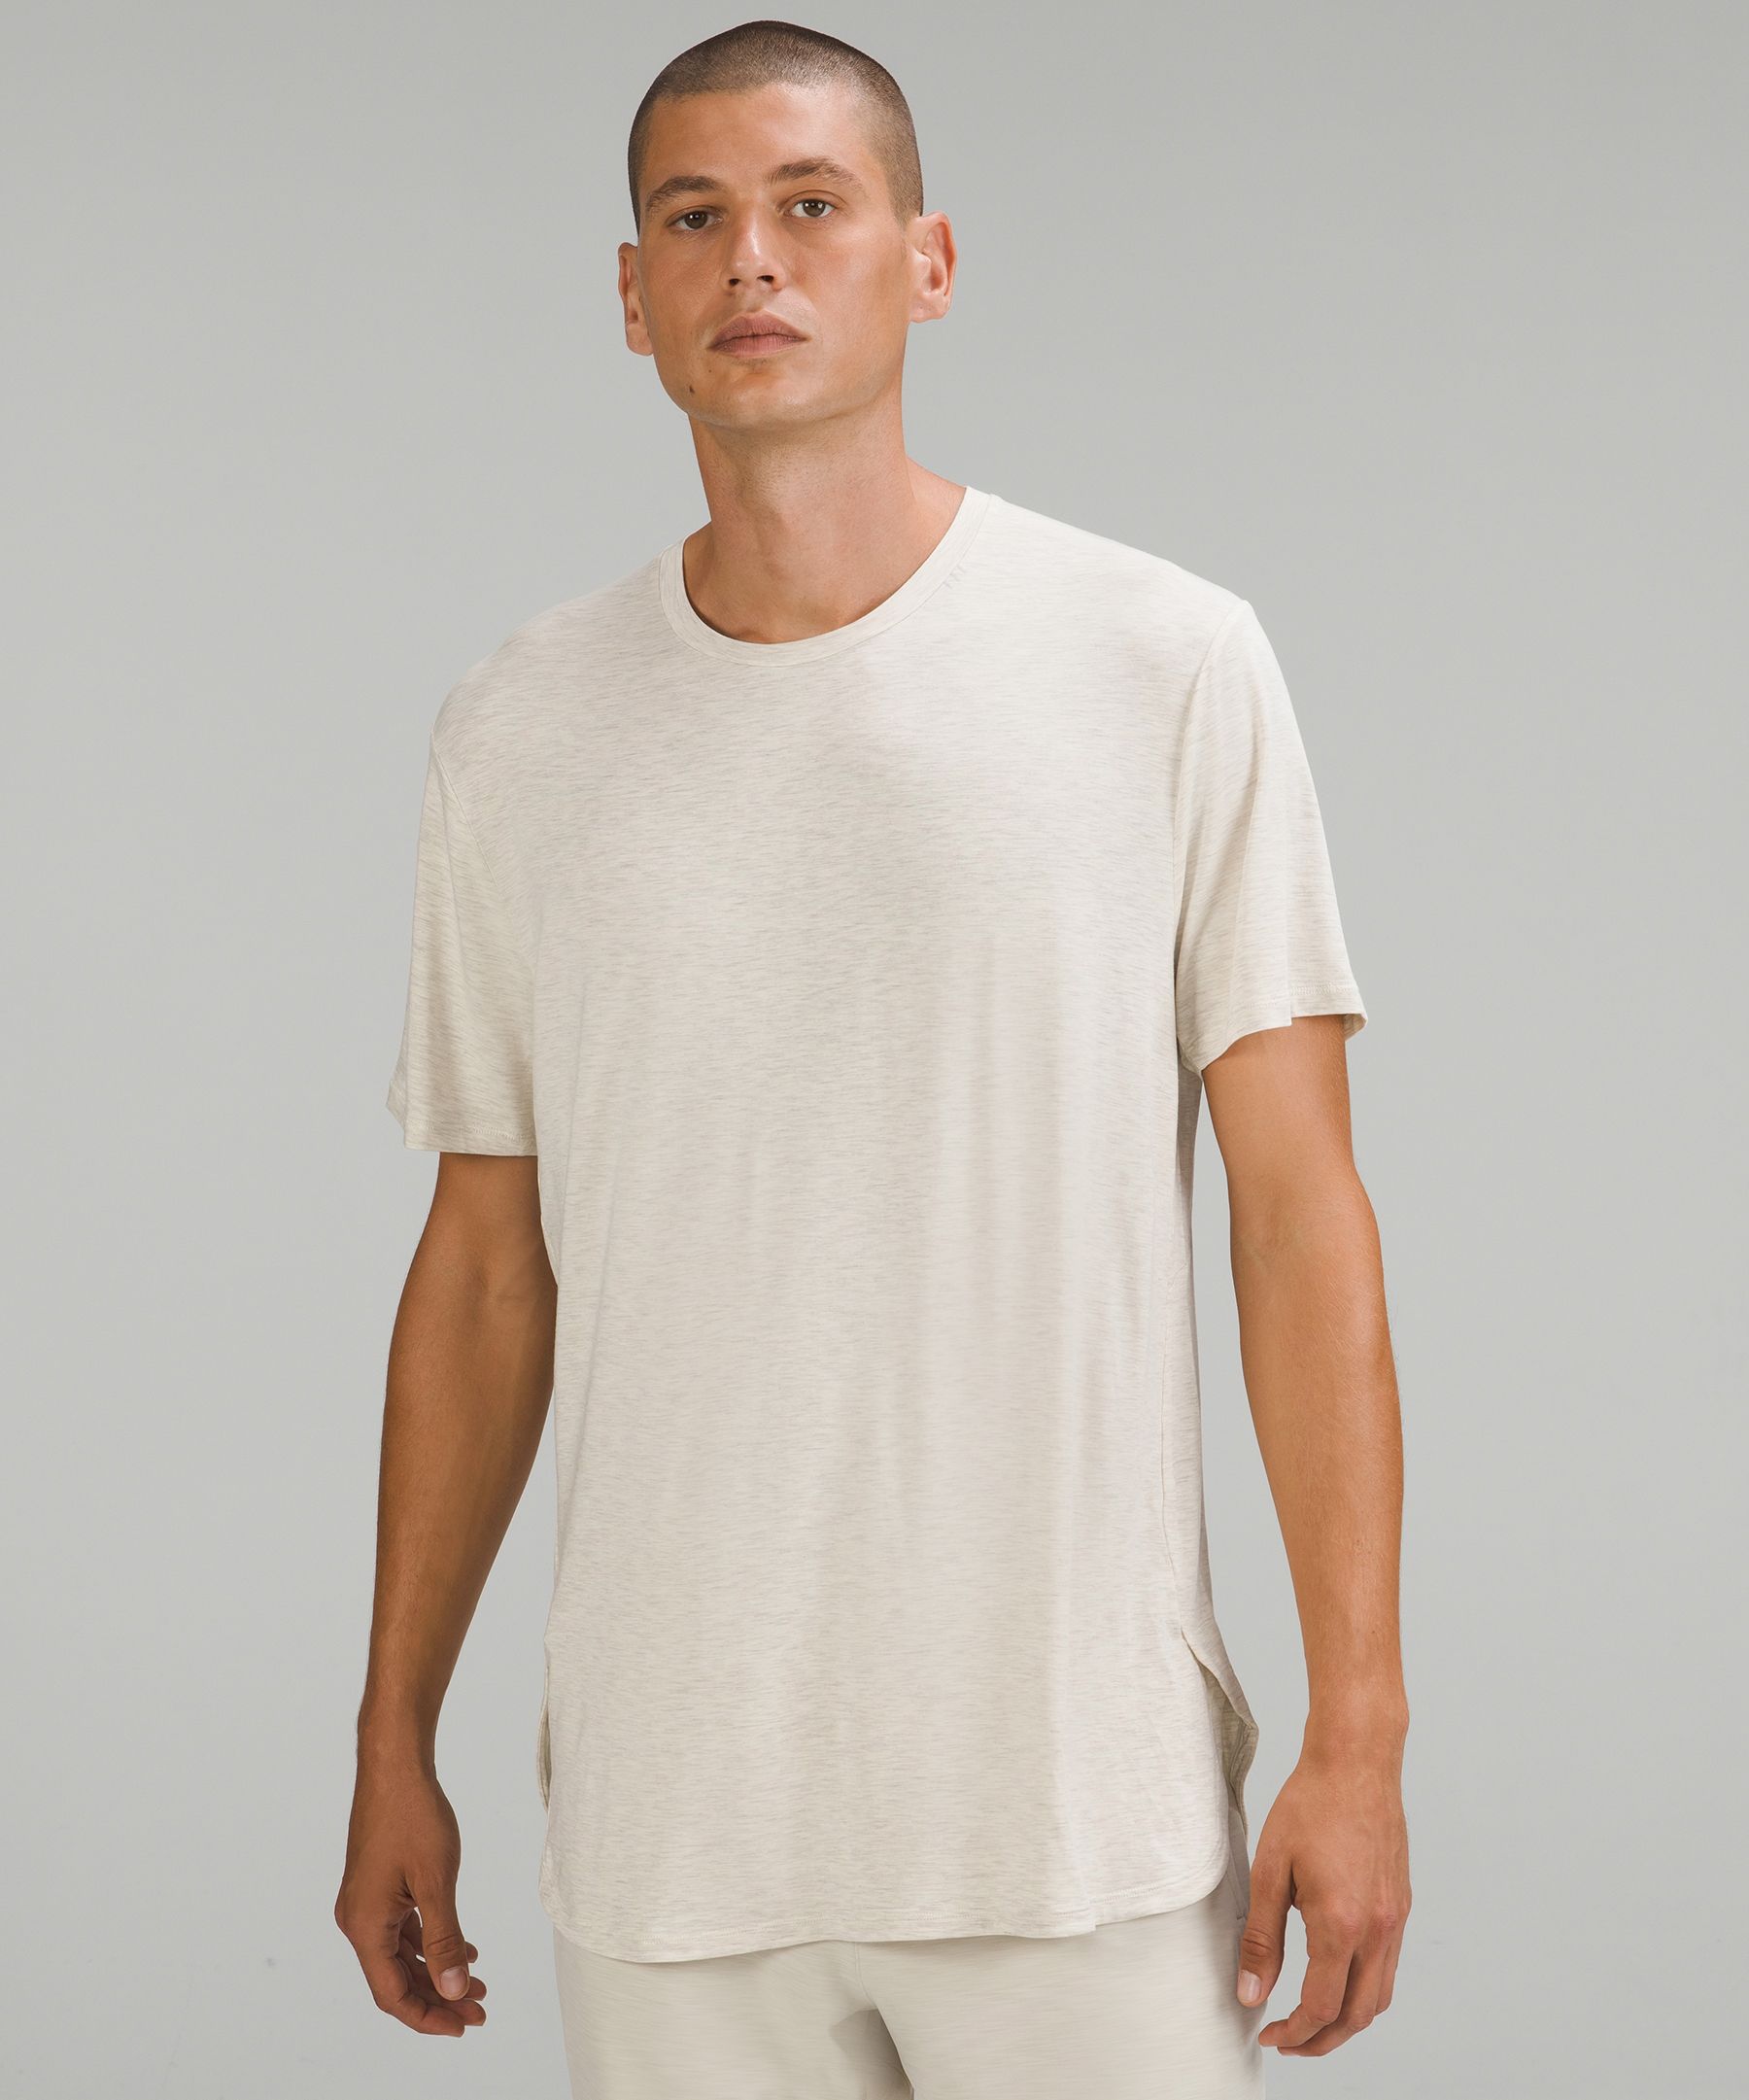 Lululemon Balancer Short-Sleeve Shirt